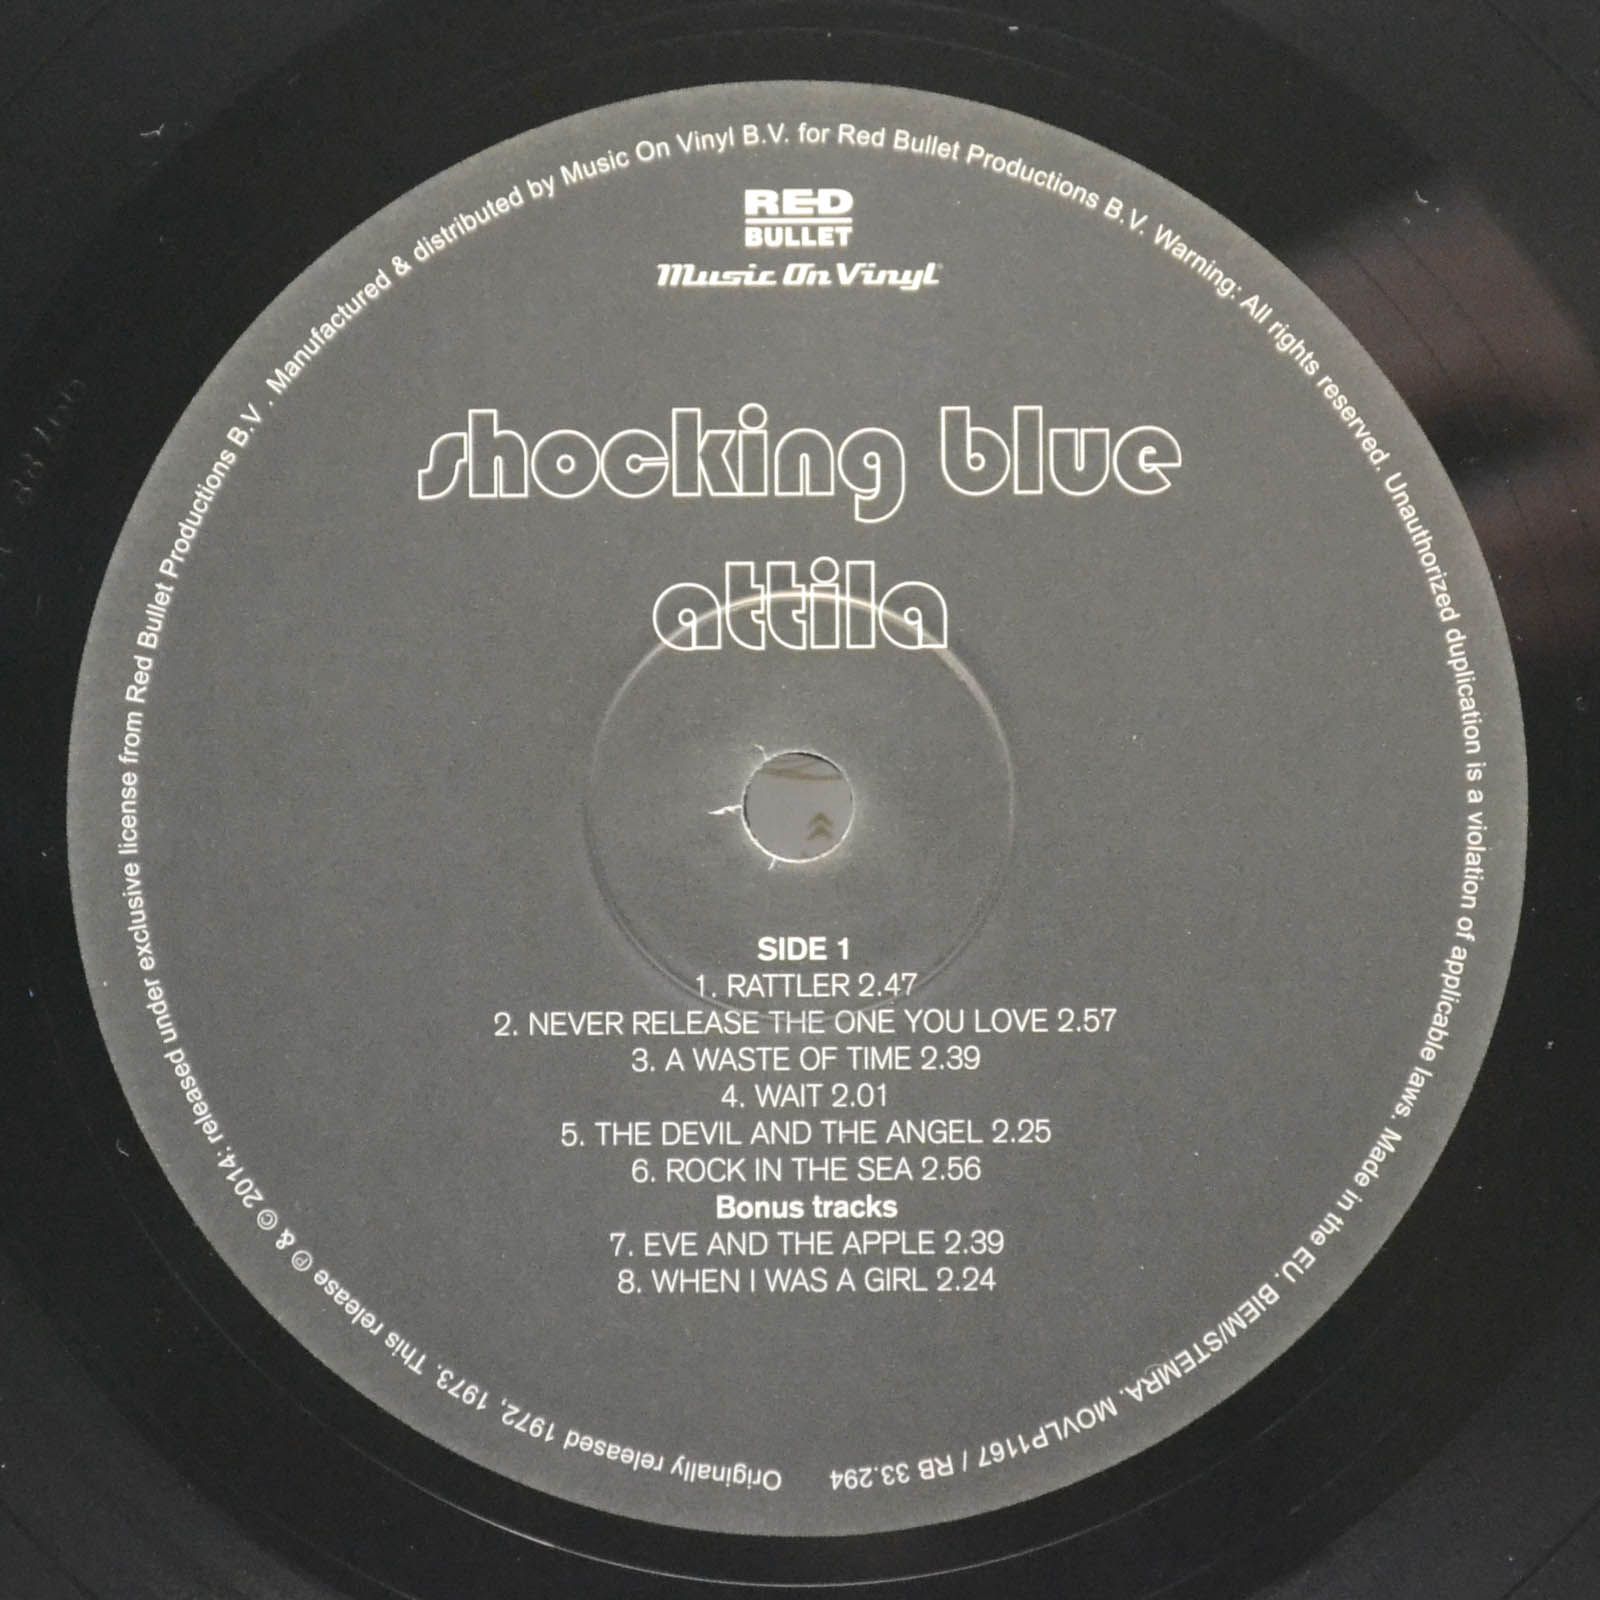 Shocking Blue — Attila, 1972